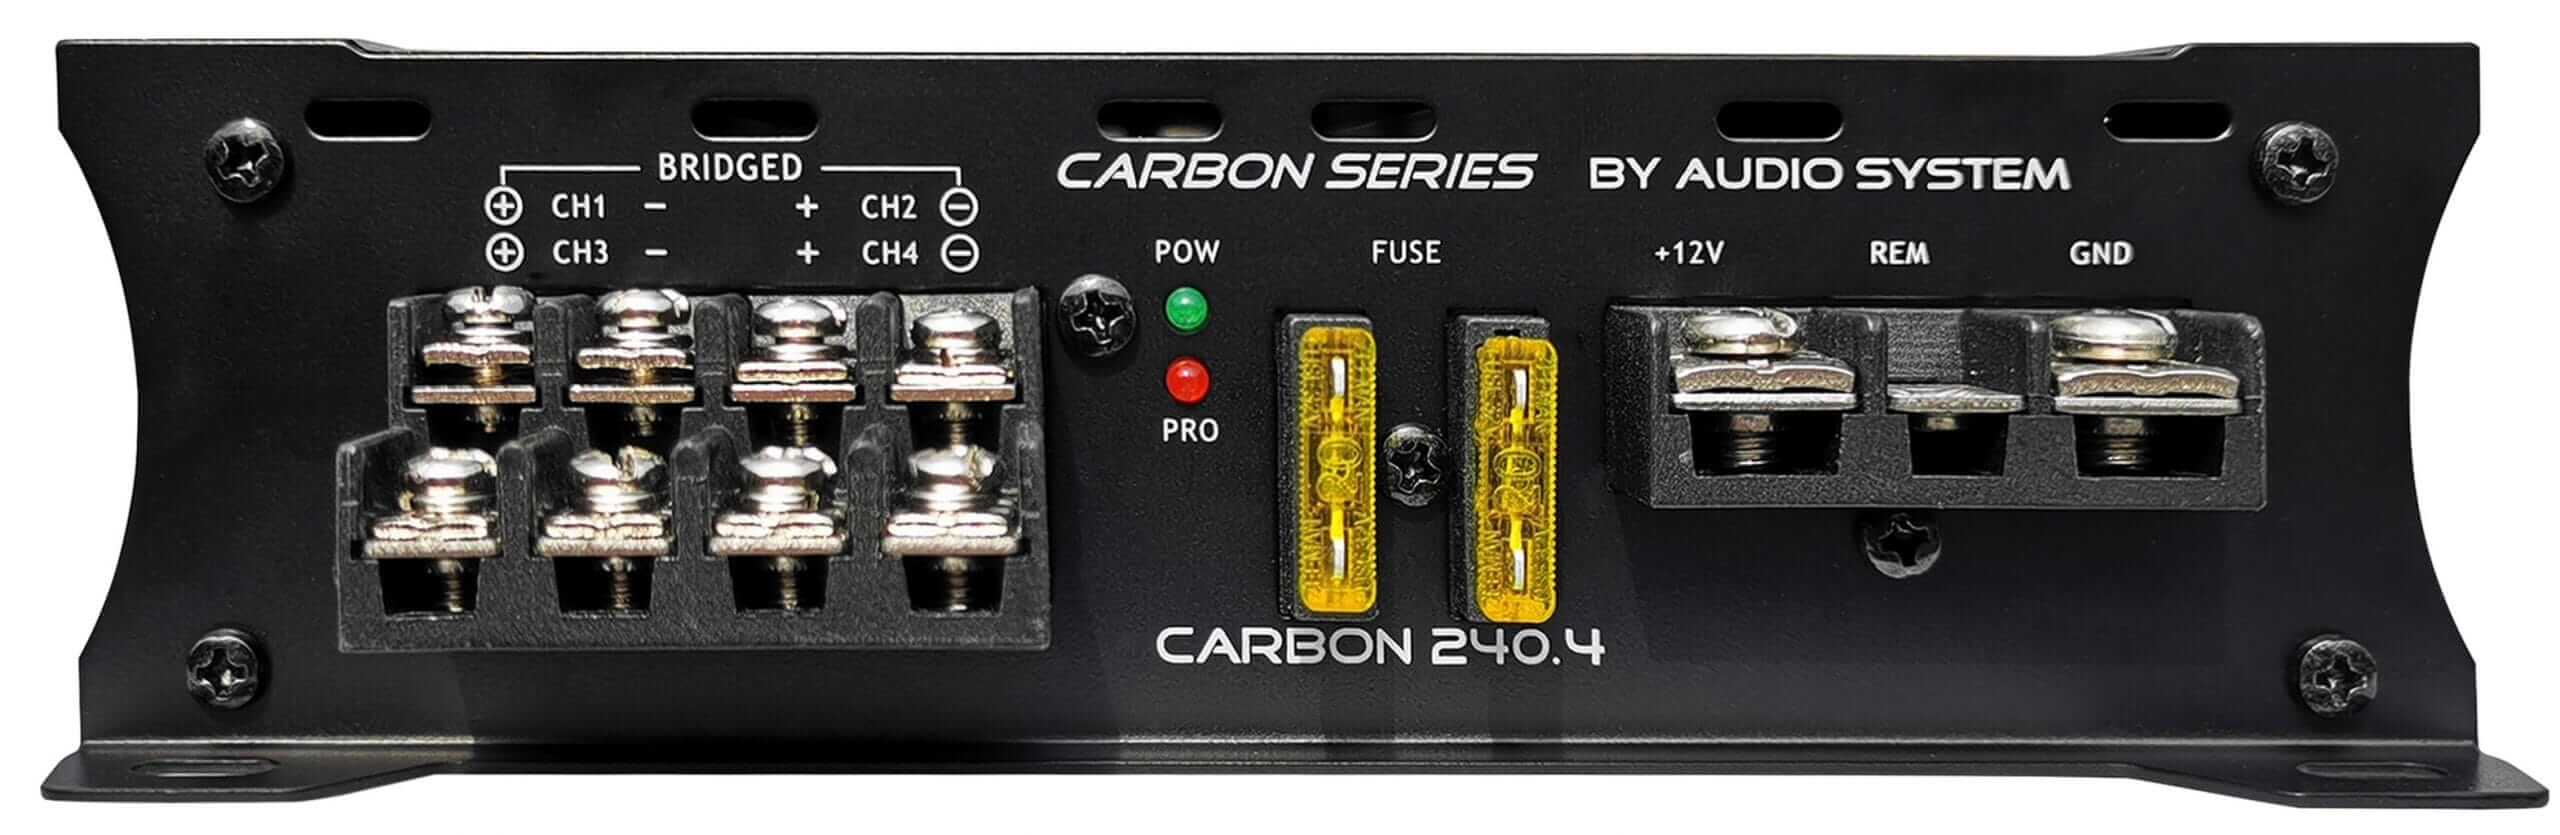 Audio System CARBON-240.4